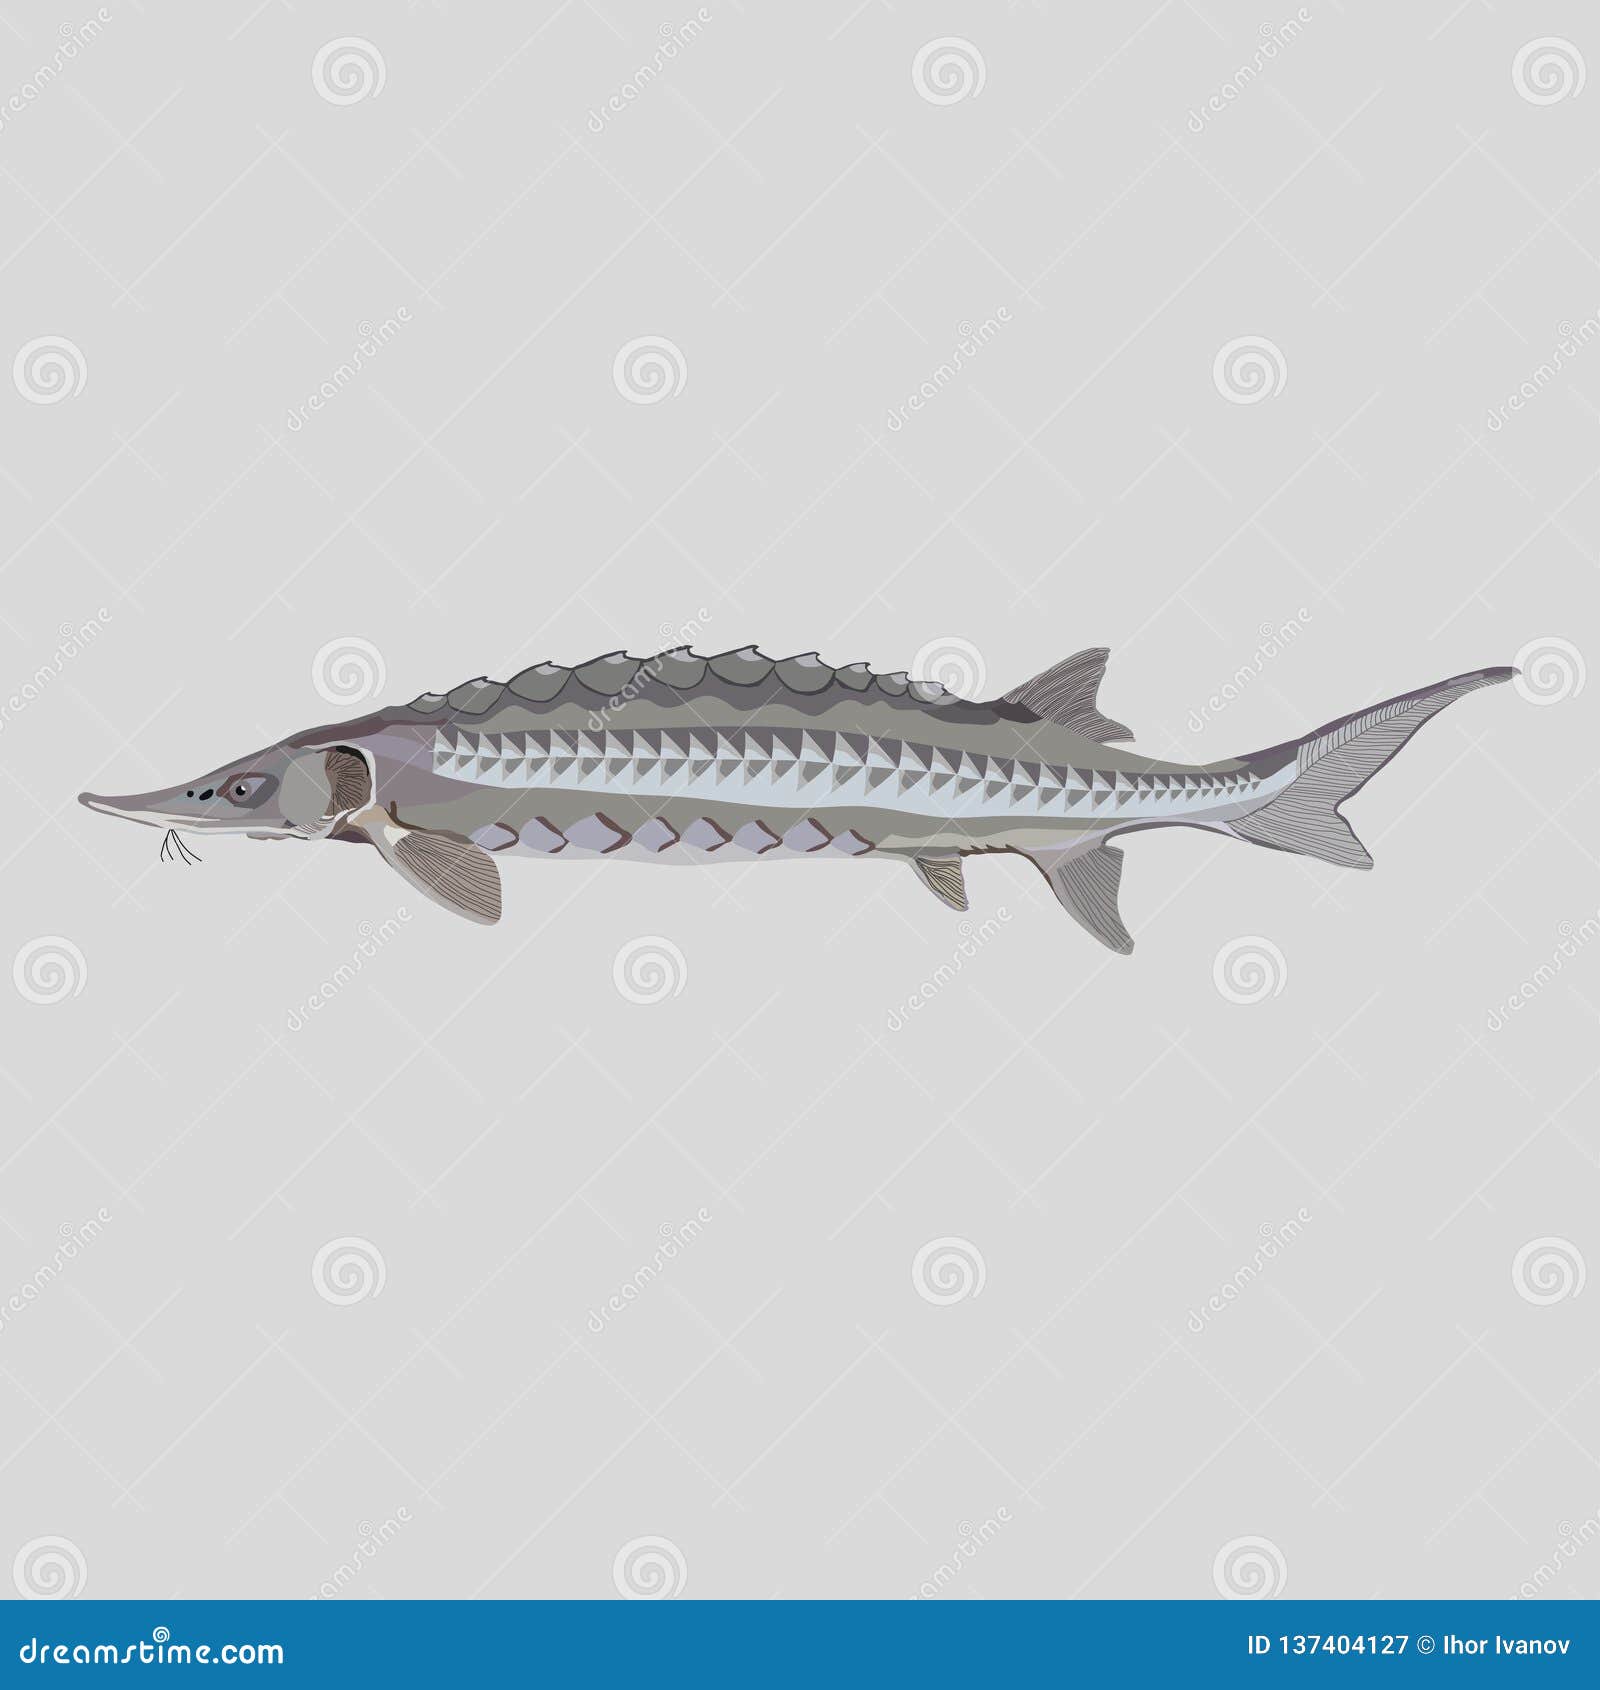 sturgeon fish logo for fishing clubs, restaurants, emblema